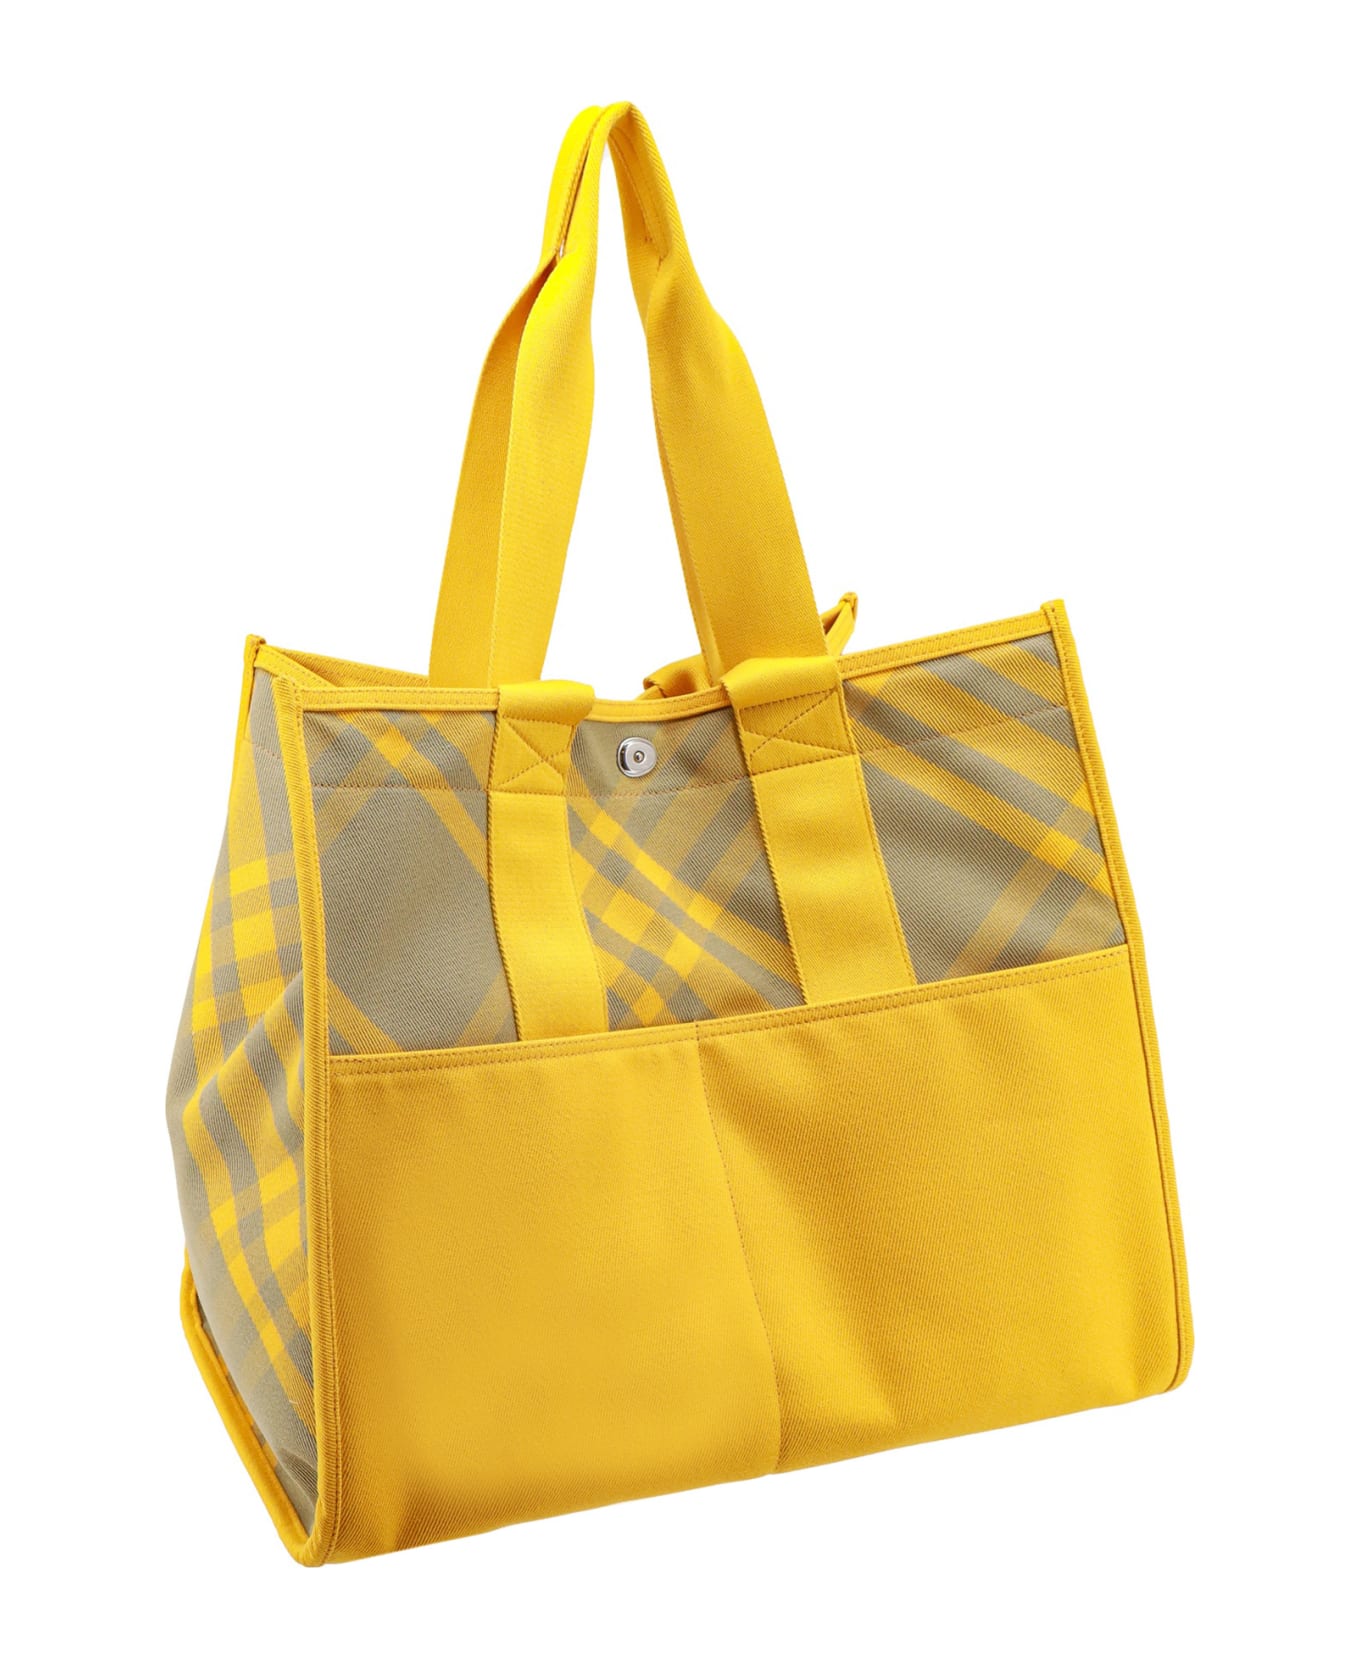 Burberry Shoulder Bag - Yellow